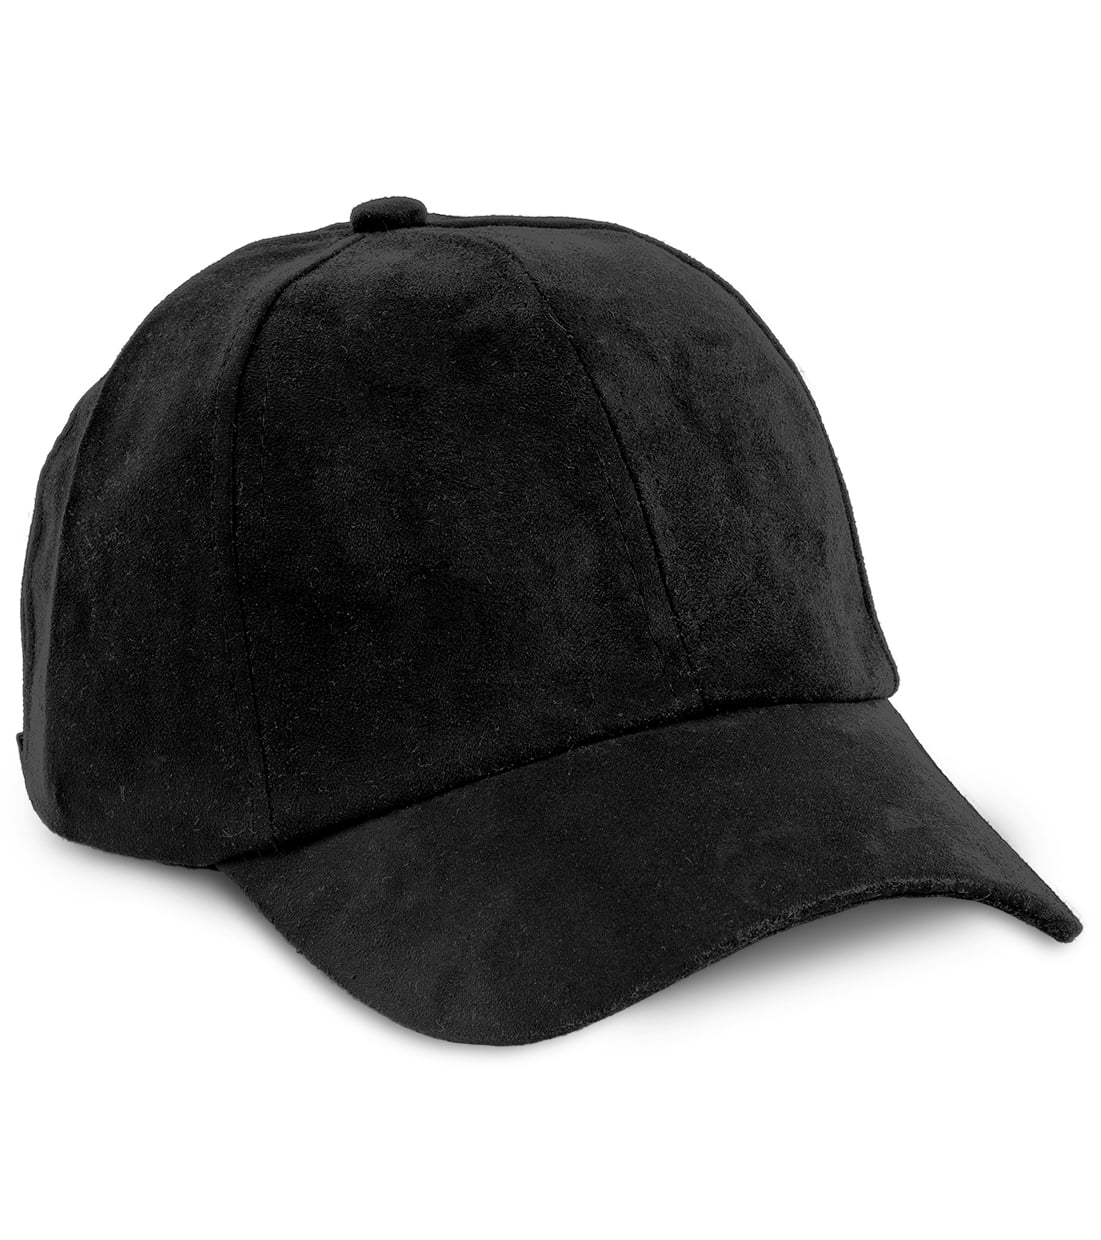 Hummel Mens Sports Casual Basic Adjustable Baseball Cap Hat Black 